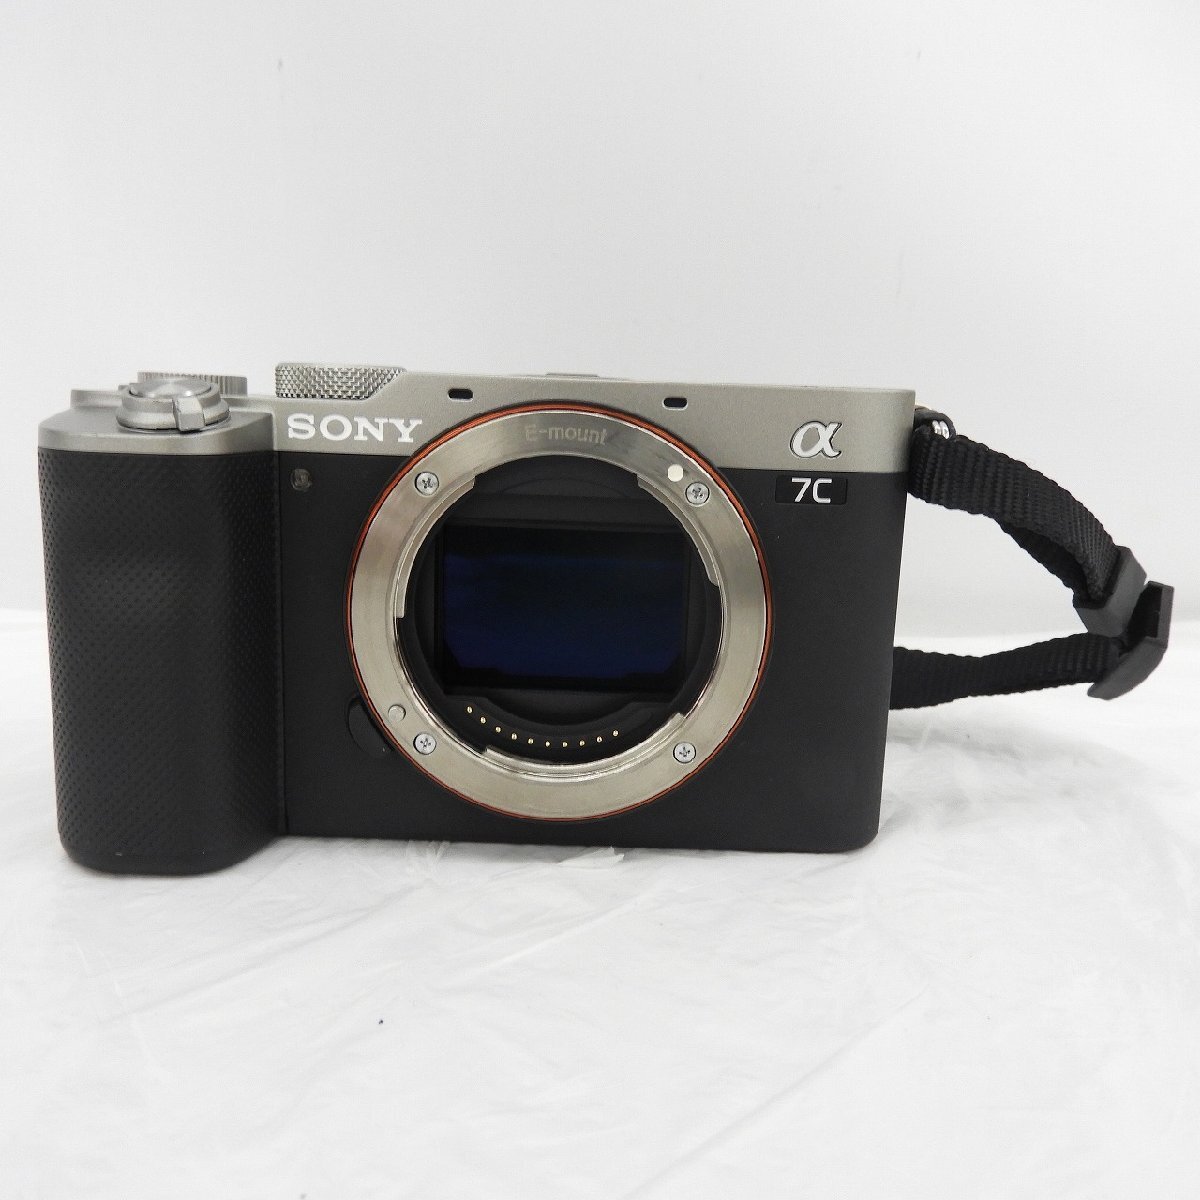 [ б/у товар ]SONY Sony беззеркальный однообъективный зеркальный камера α7C корпус ILCE-7C 11581199 0520